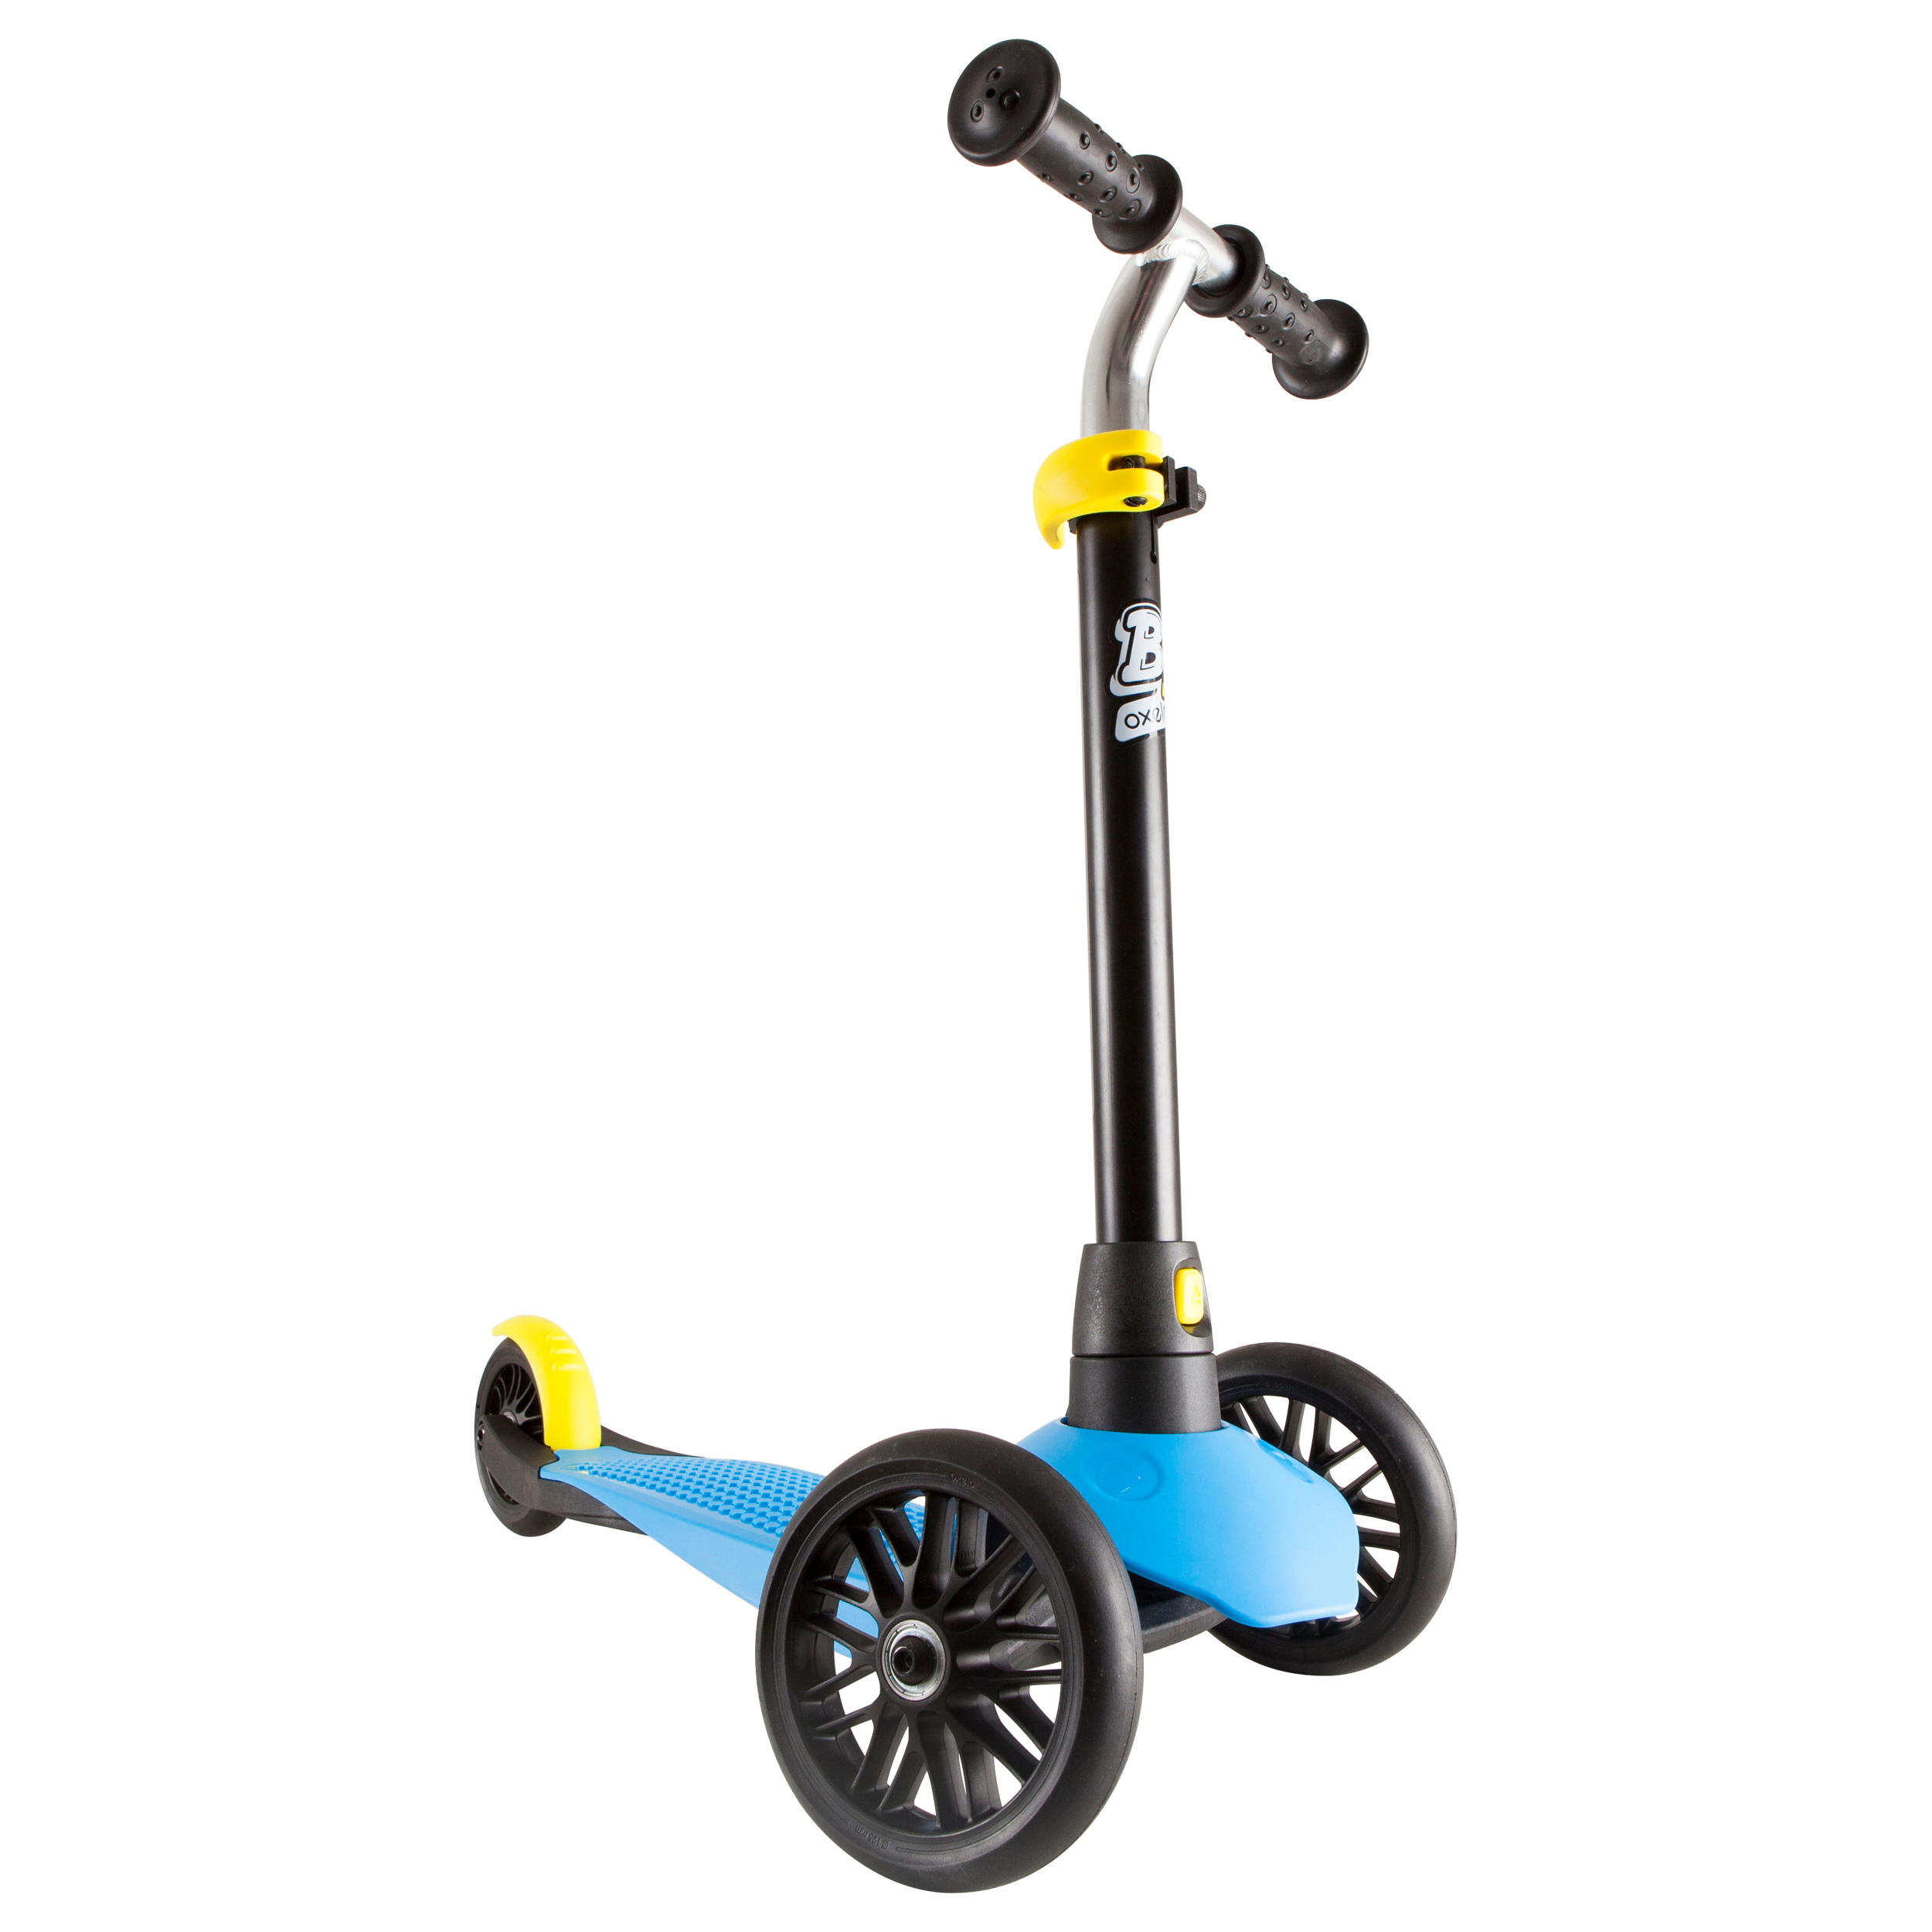 B1 3-wheeled kids scooter|Buy Kids 